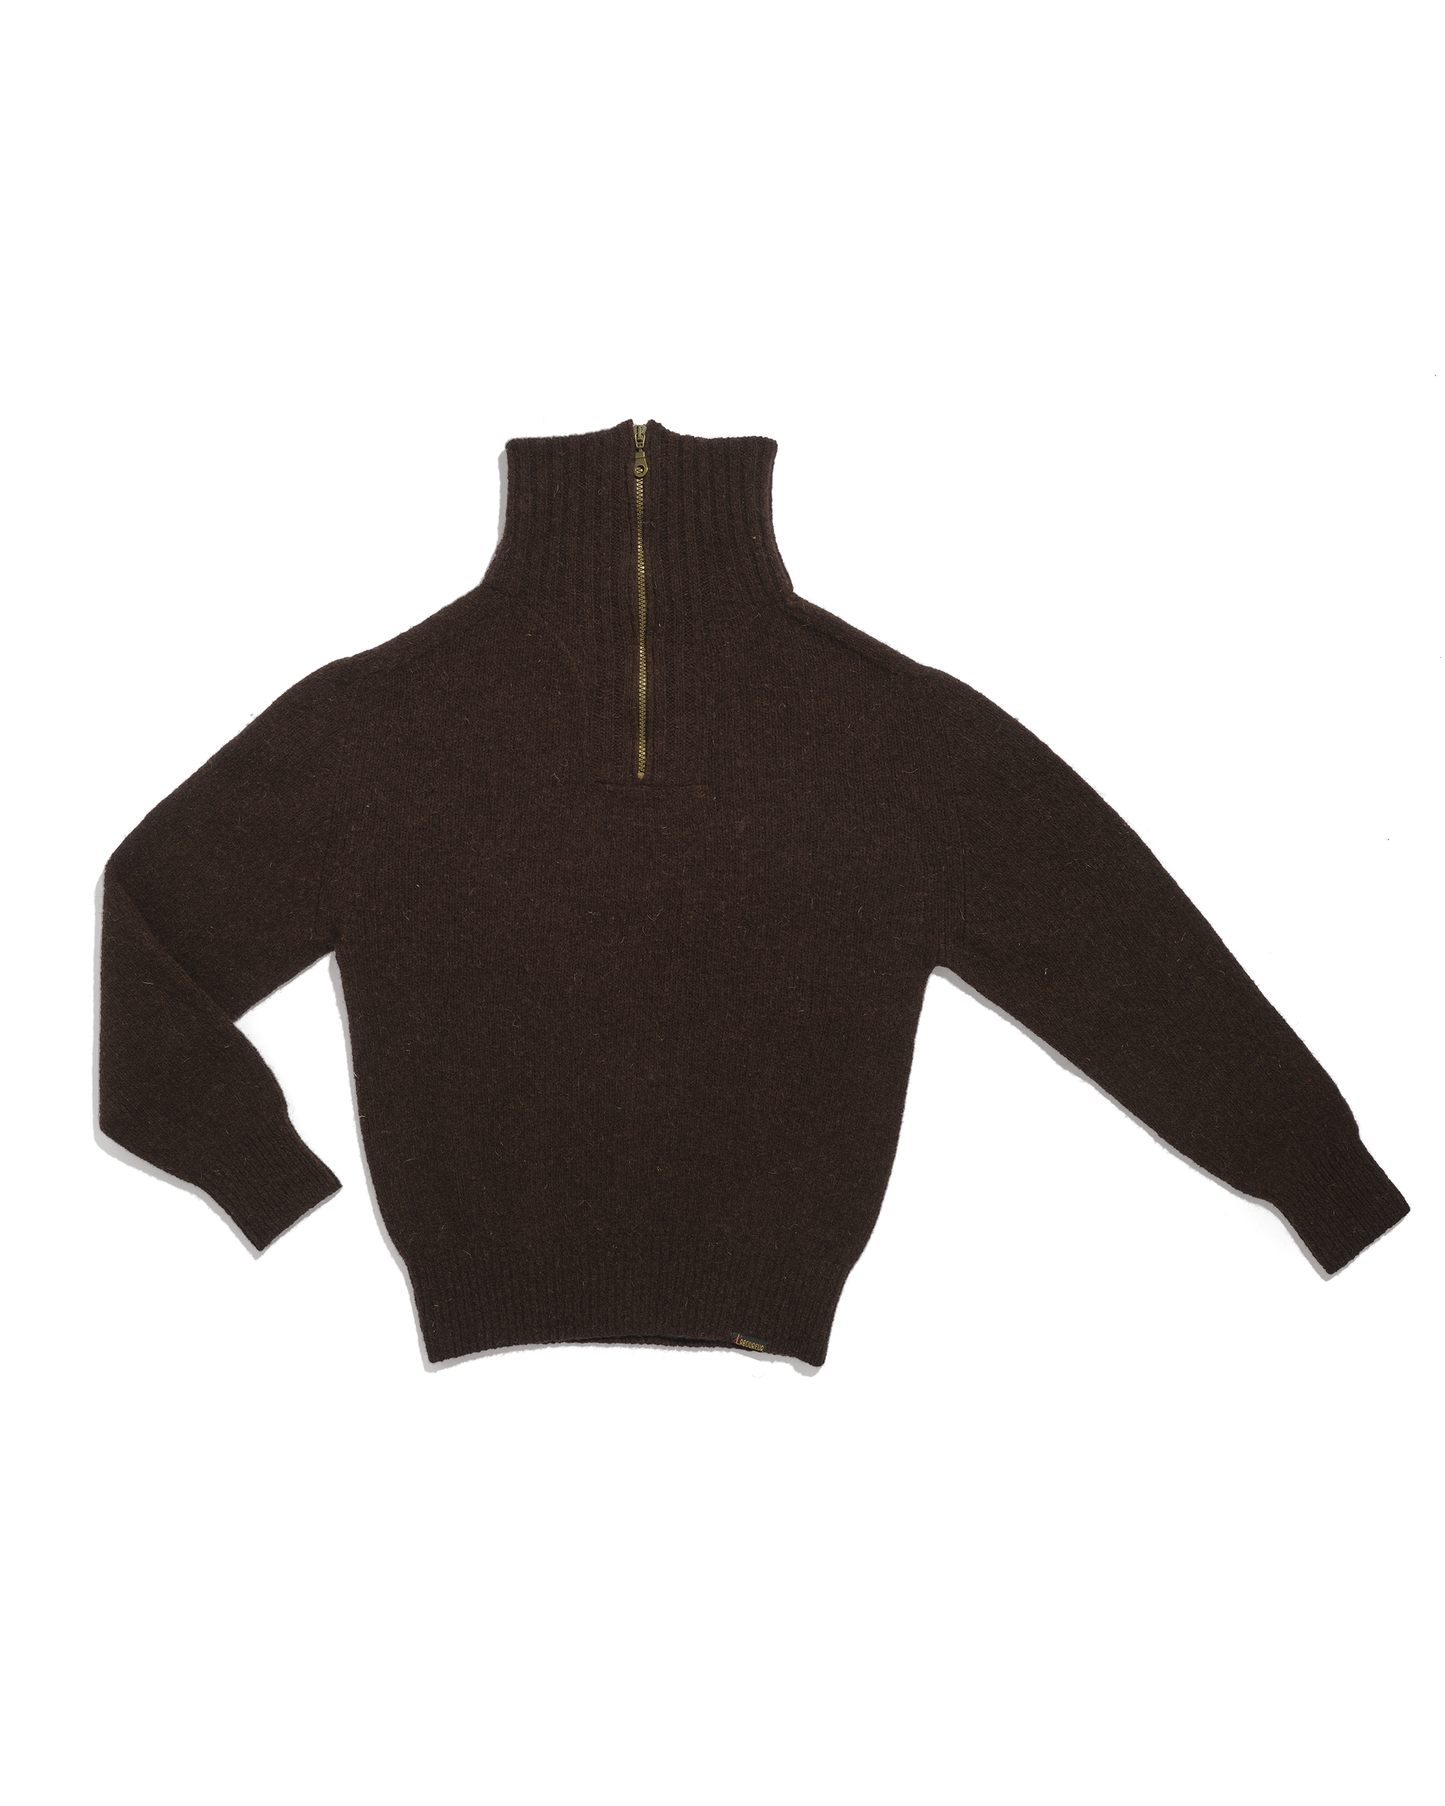 Trucker sweater made from brown burel wool